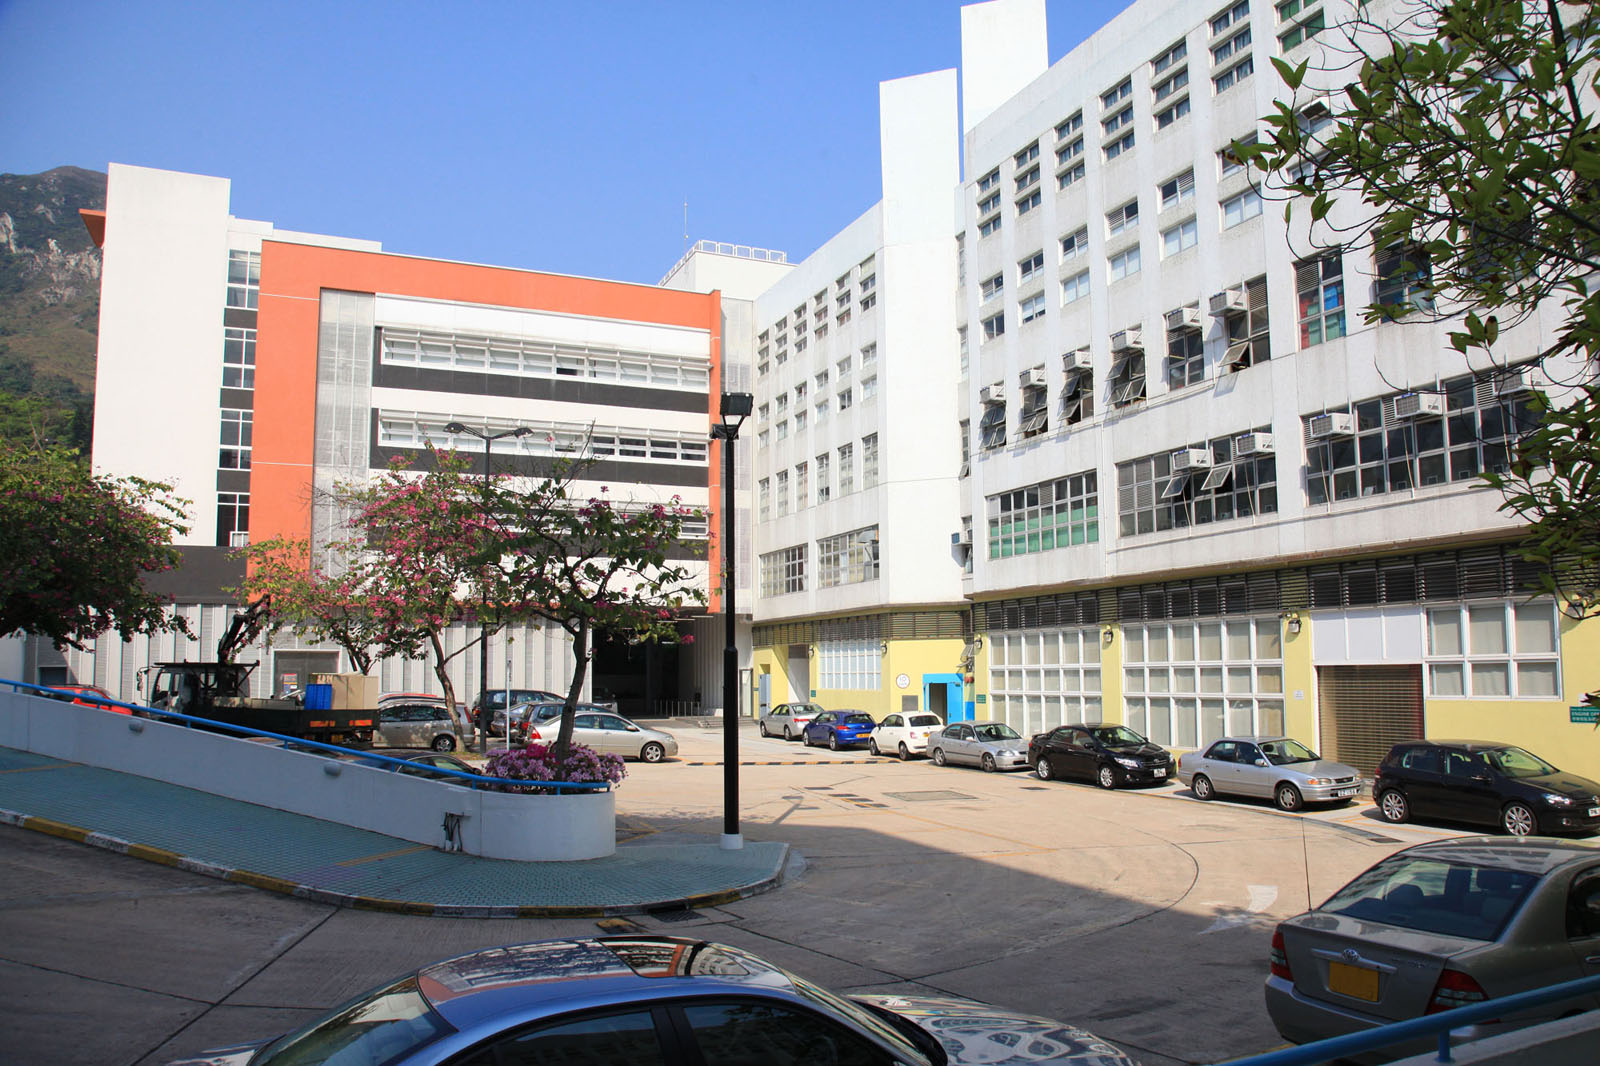 Photo 2: Hong Kong Institute of Vocational Education (Tuen Mun)